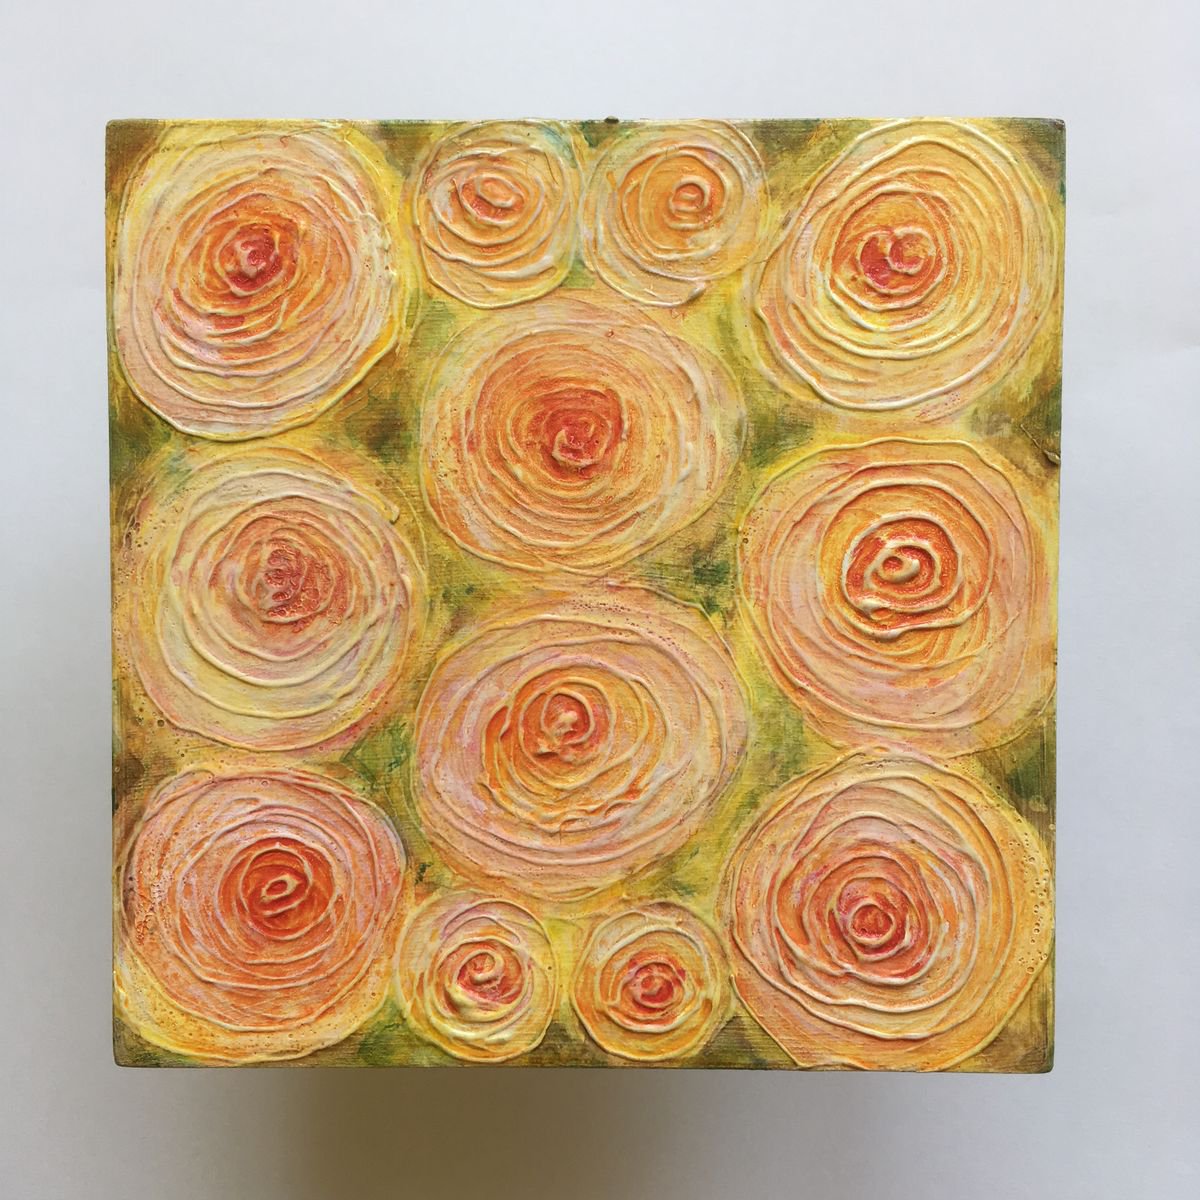 A Dozen Golden Roses by Nichola Campbell